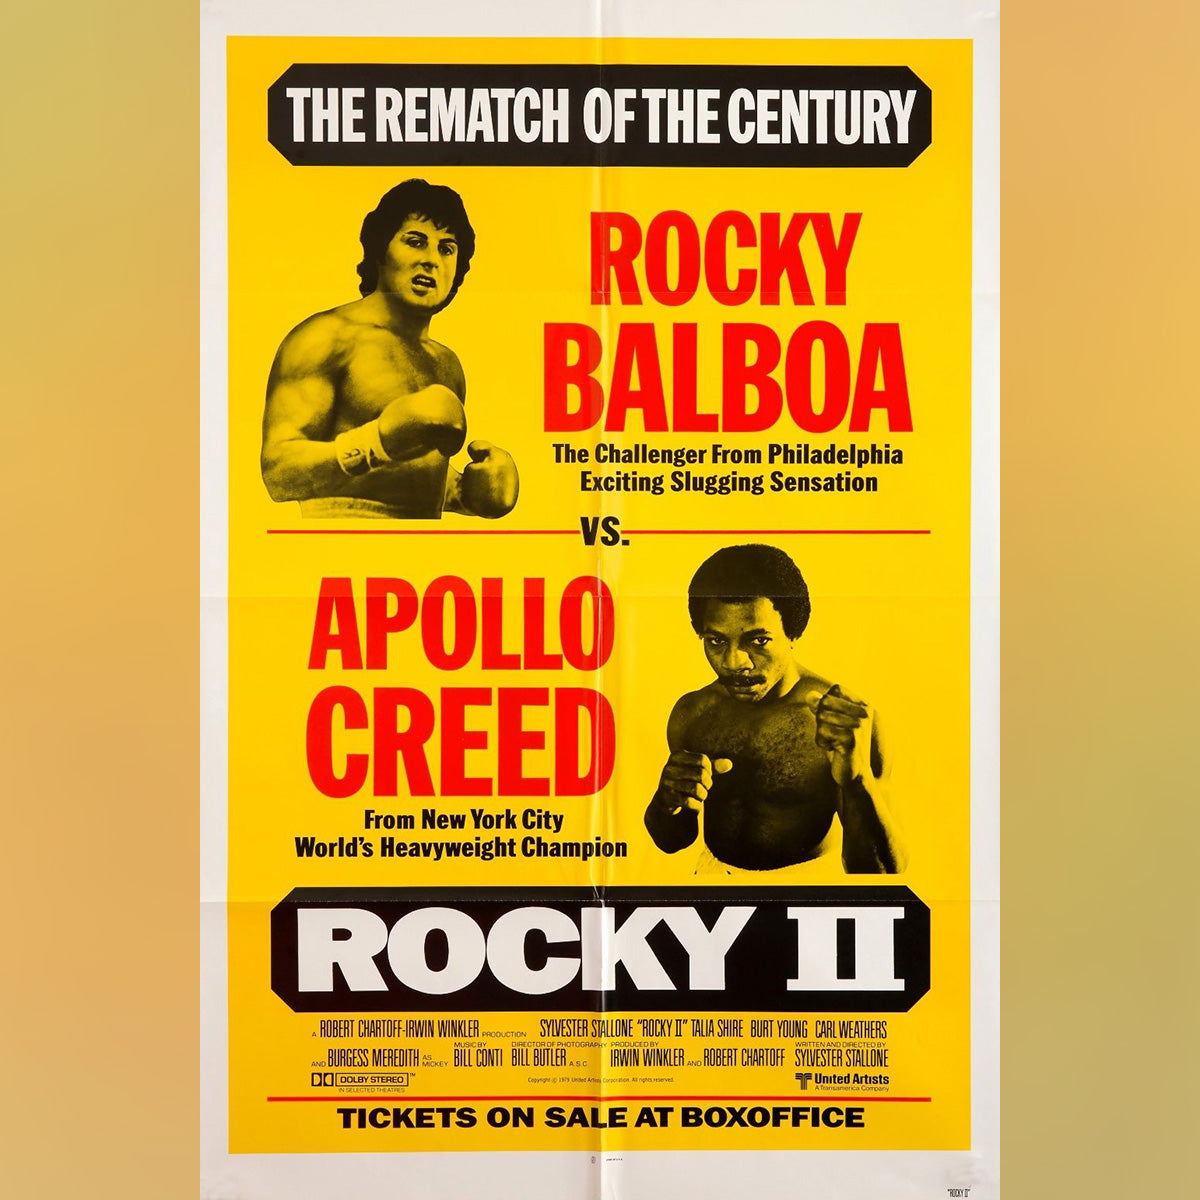 Original Movie Poster of Rocky II (1979)